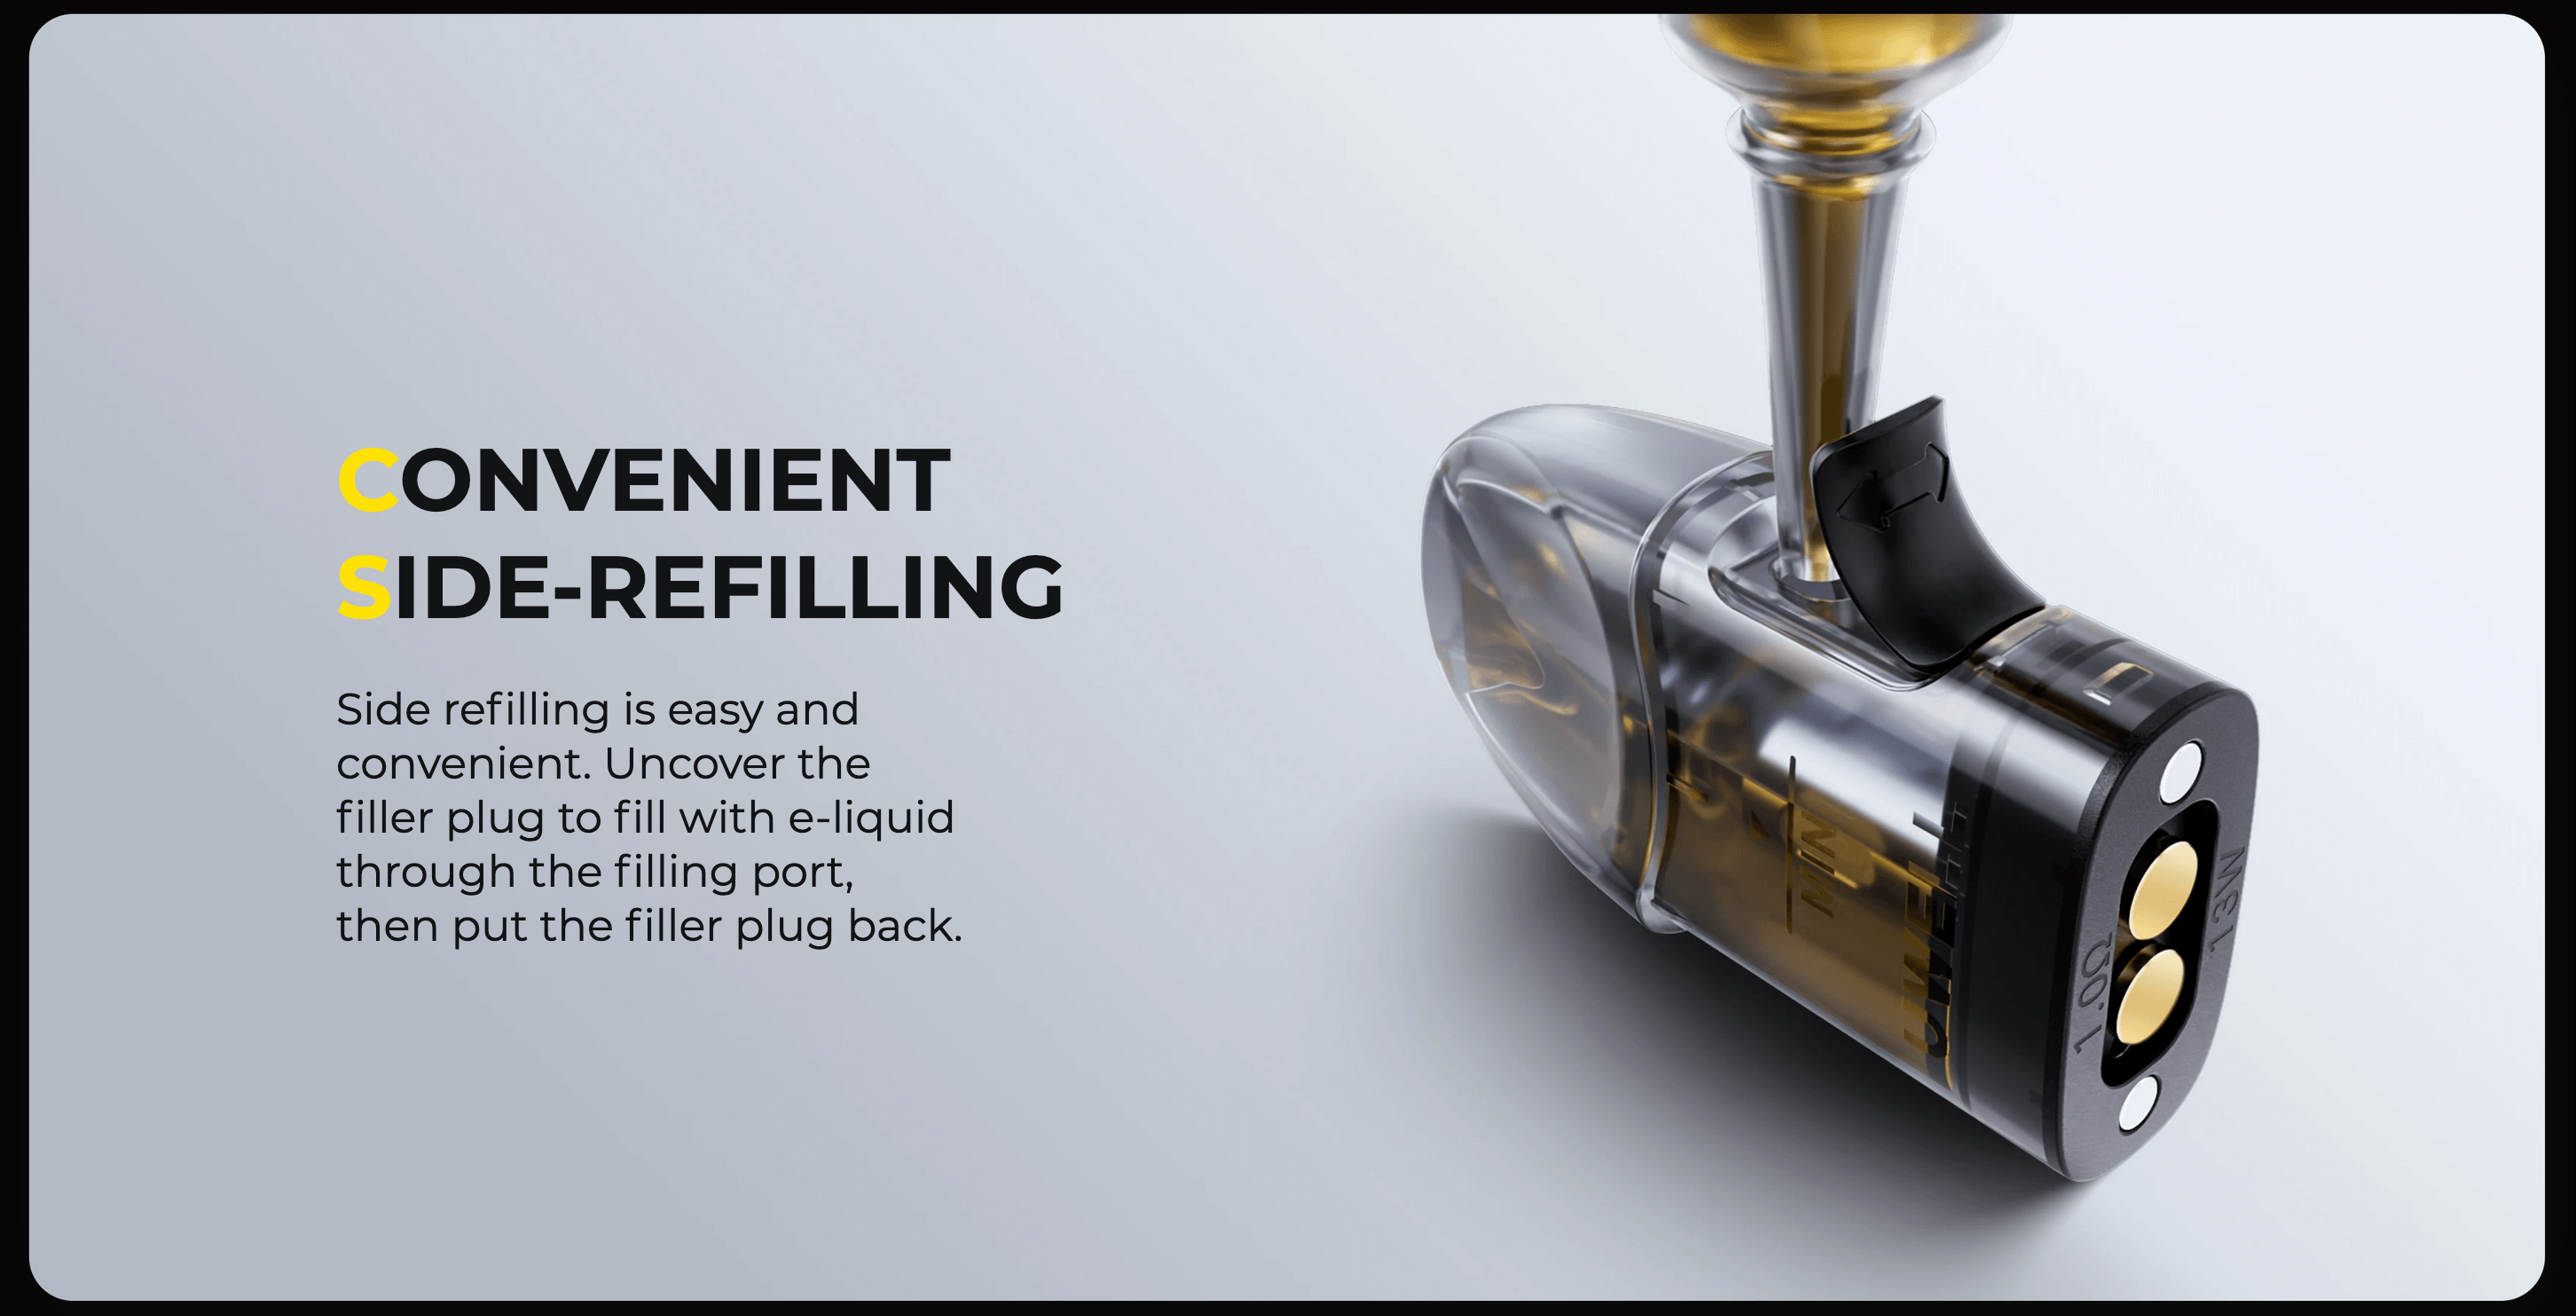 Caliburn A3S Pod Vape Kit by Uwell - convenient side refilling